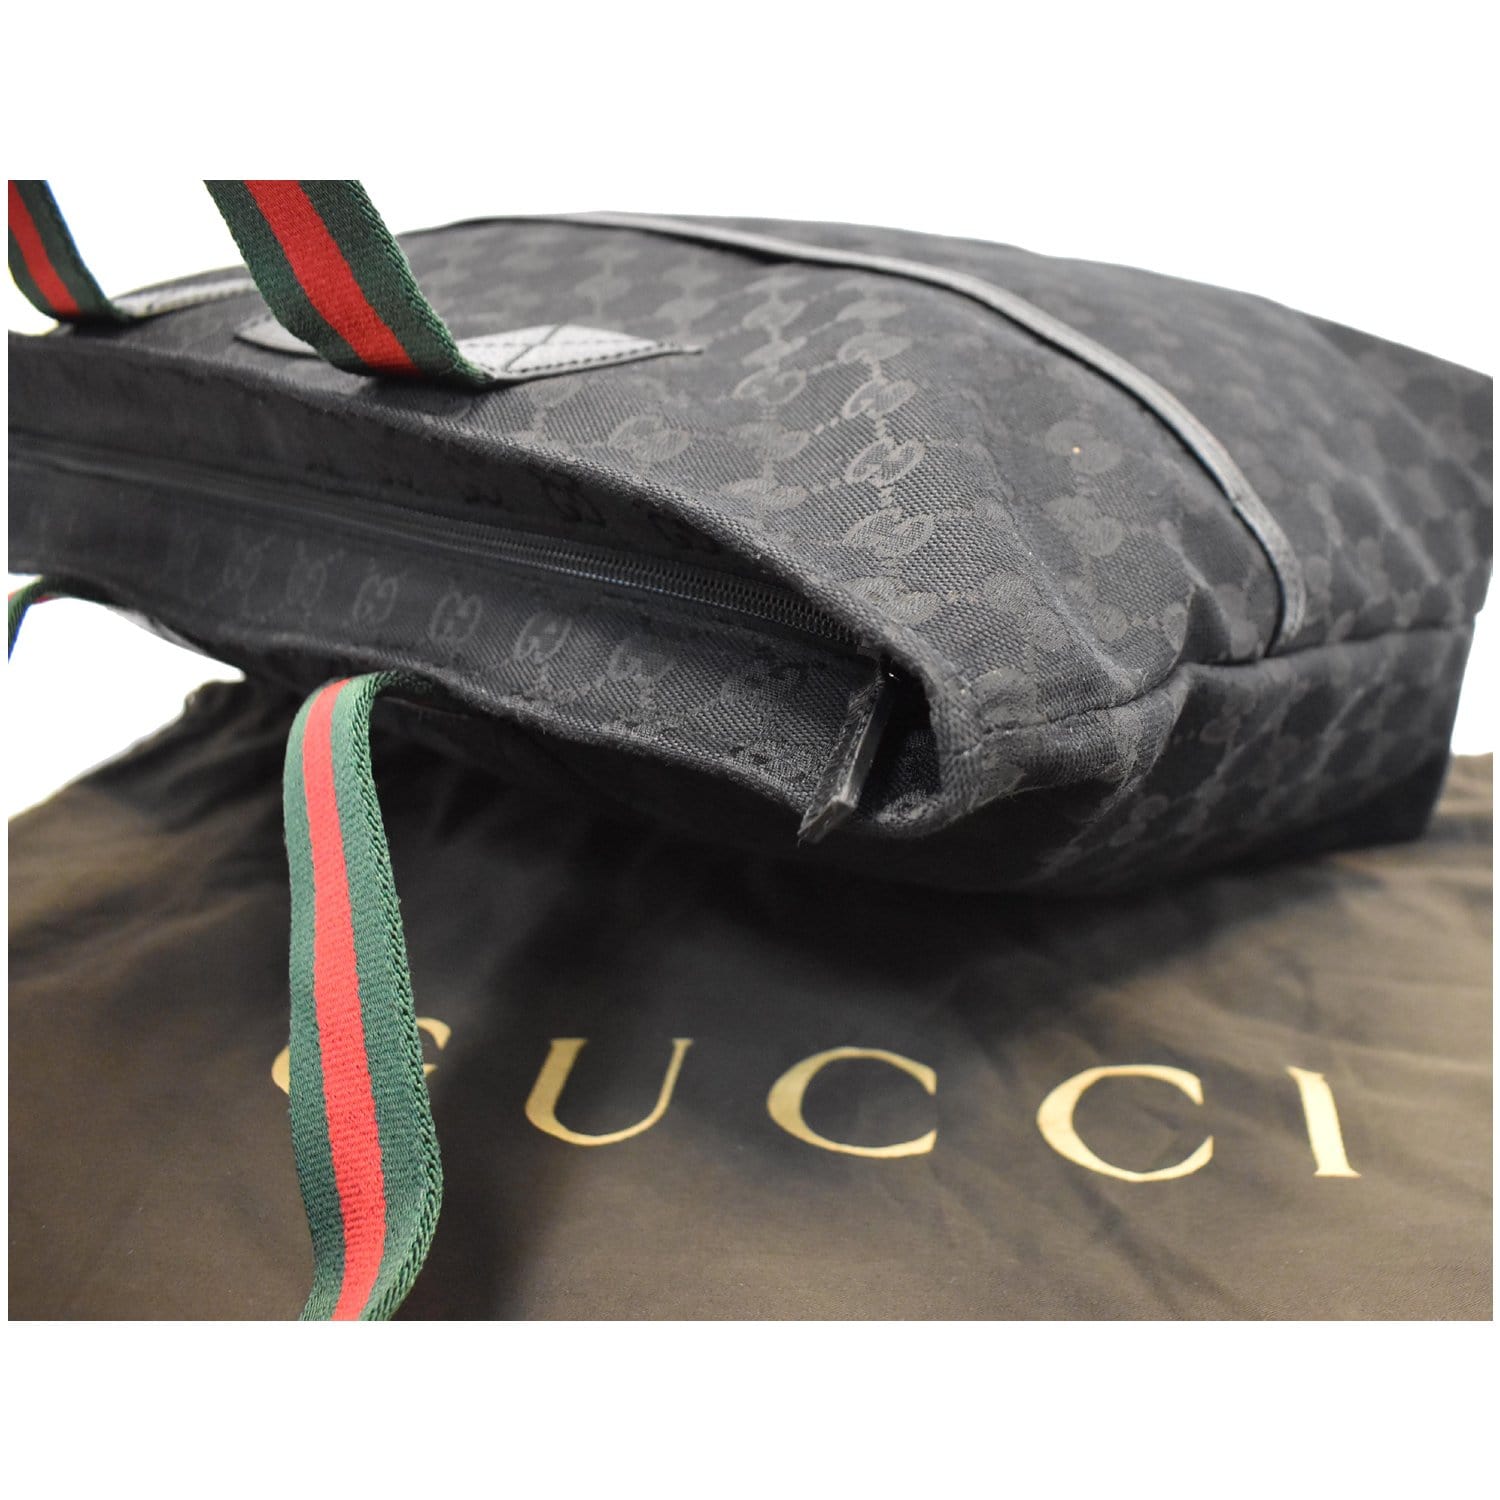 Gucci Supreme Monogram GG Web Handle Tote Bag